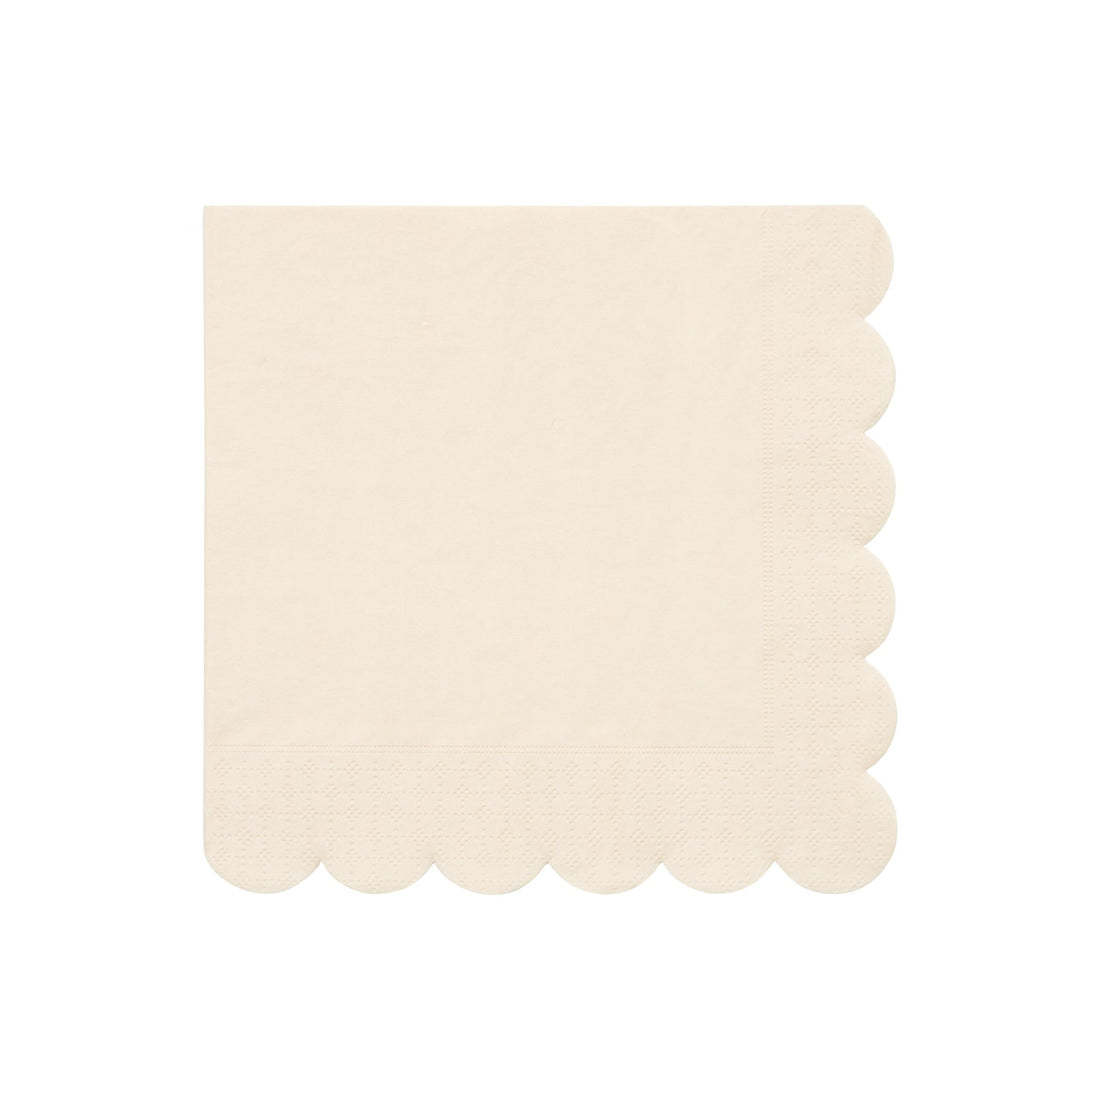 A single Cream Eco Napkin by Meri Meri with scalloped edges against a plain background.